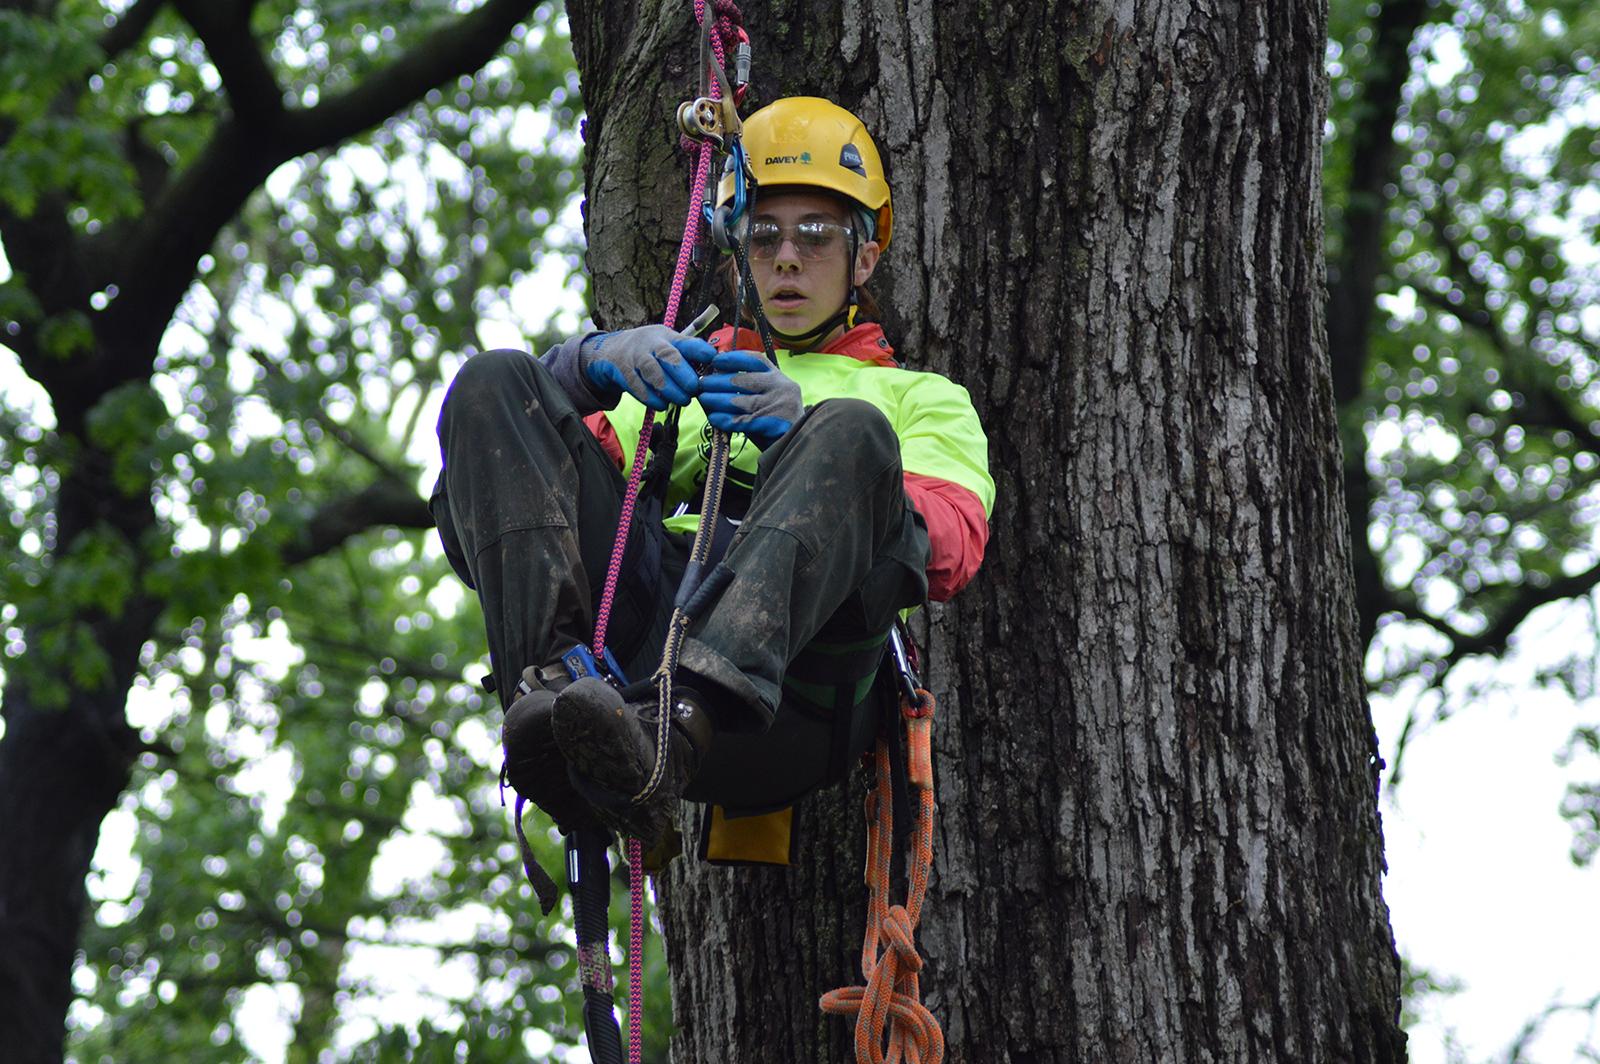 Saturday’s tree-climbing event includes a demonstration for kids. (April Toney / Illinois Arborist Association)